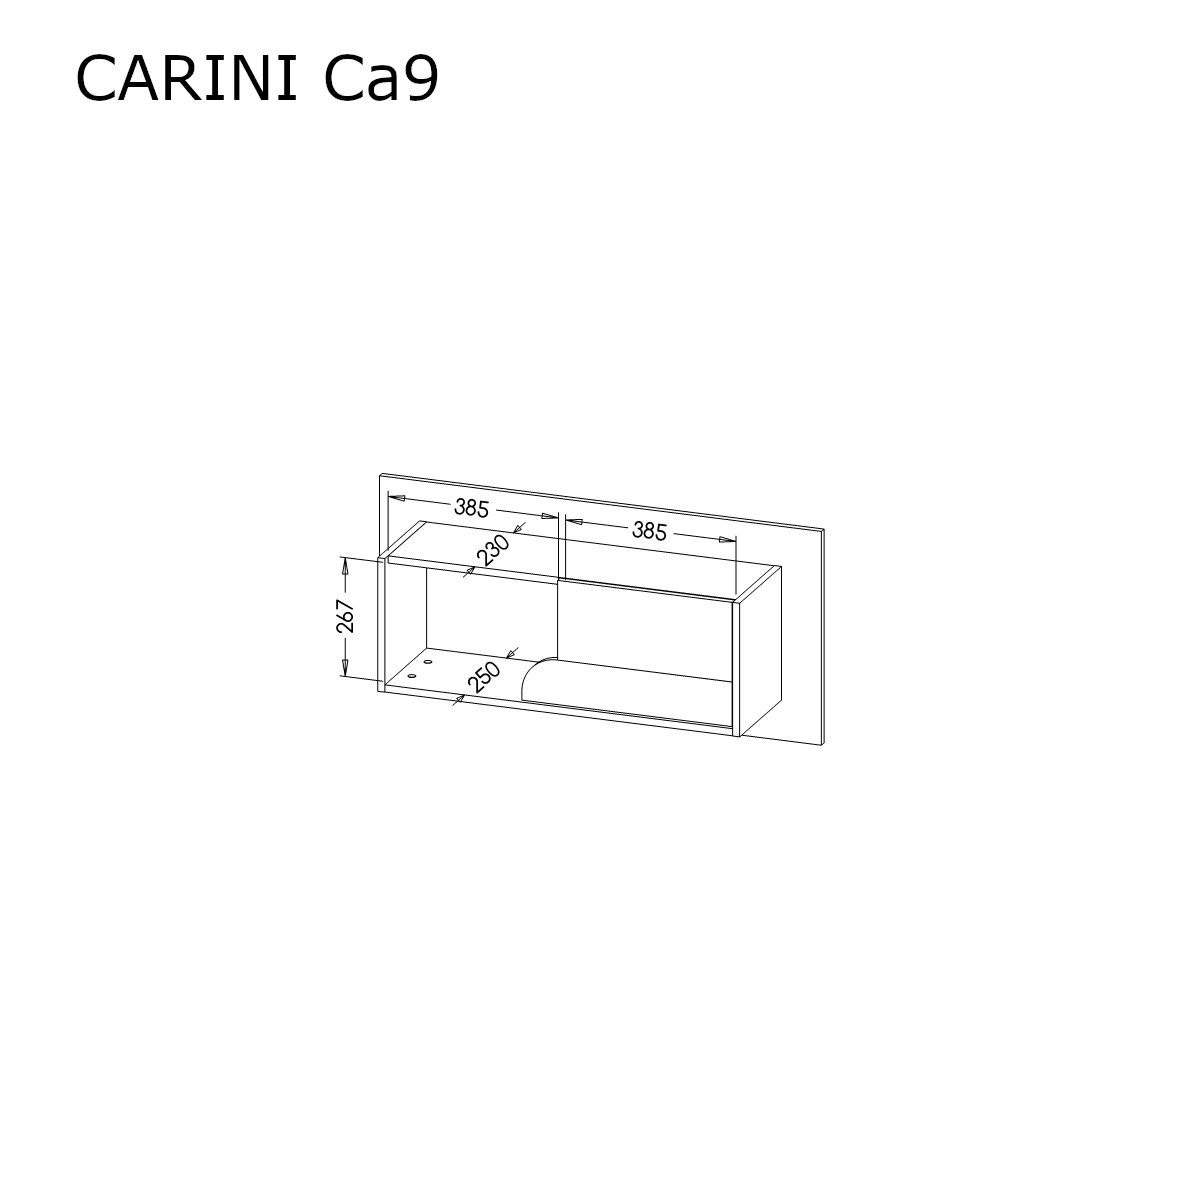 Carini CA9 Wall Shelf 100cm